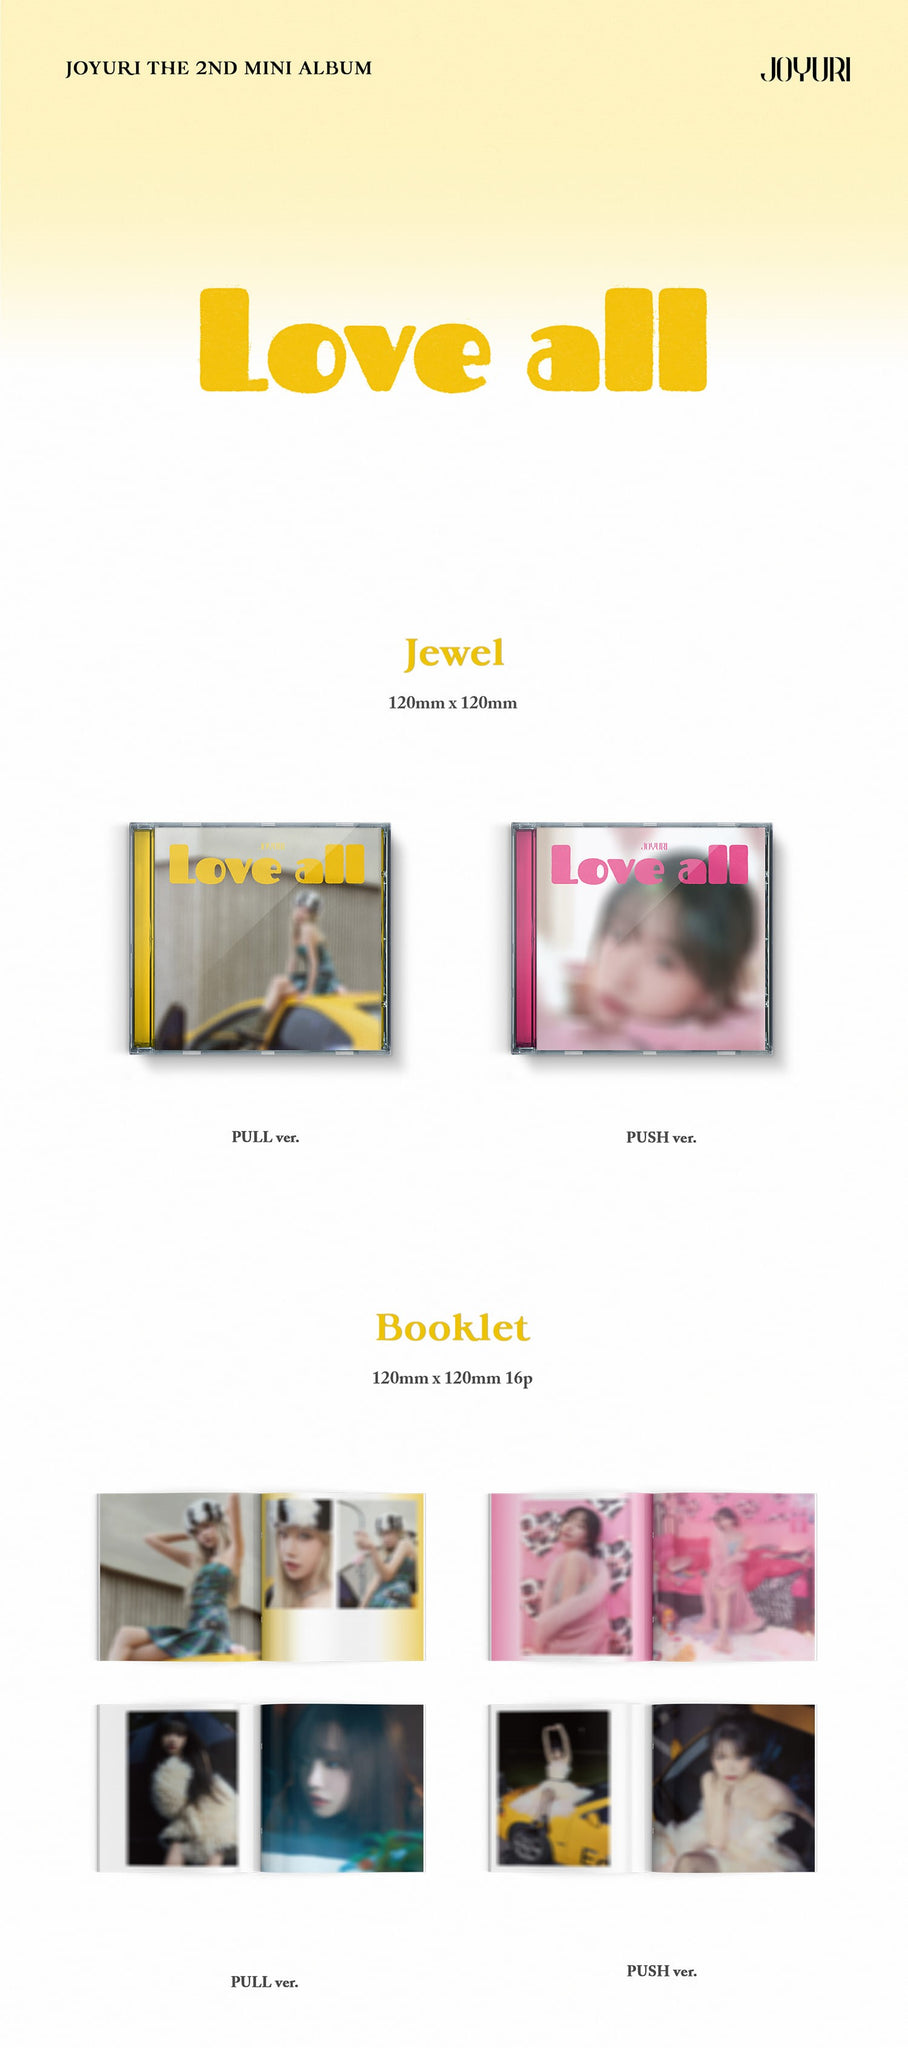 MONSTA X Mini Album Vol. 11 - SHAPE of LOVE (Jewel Ver.) (Random)